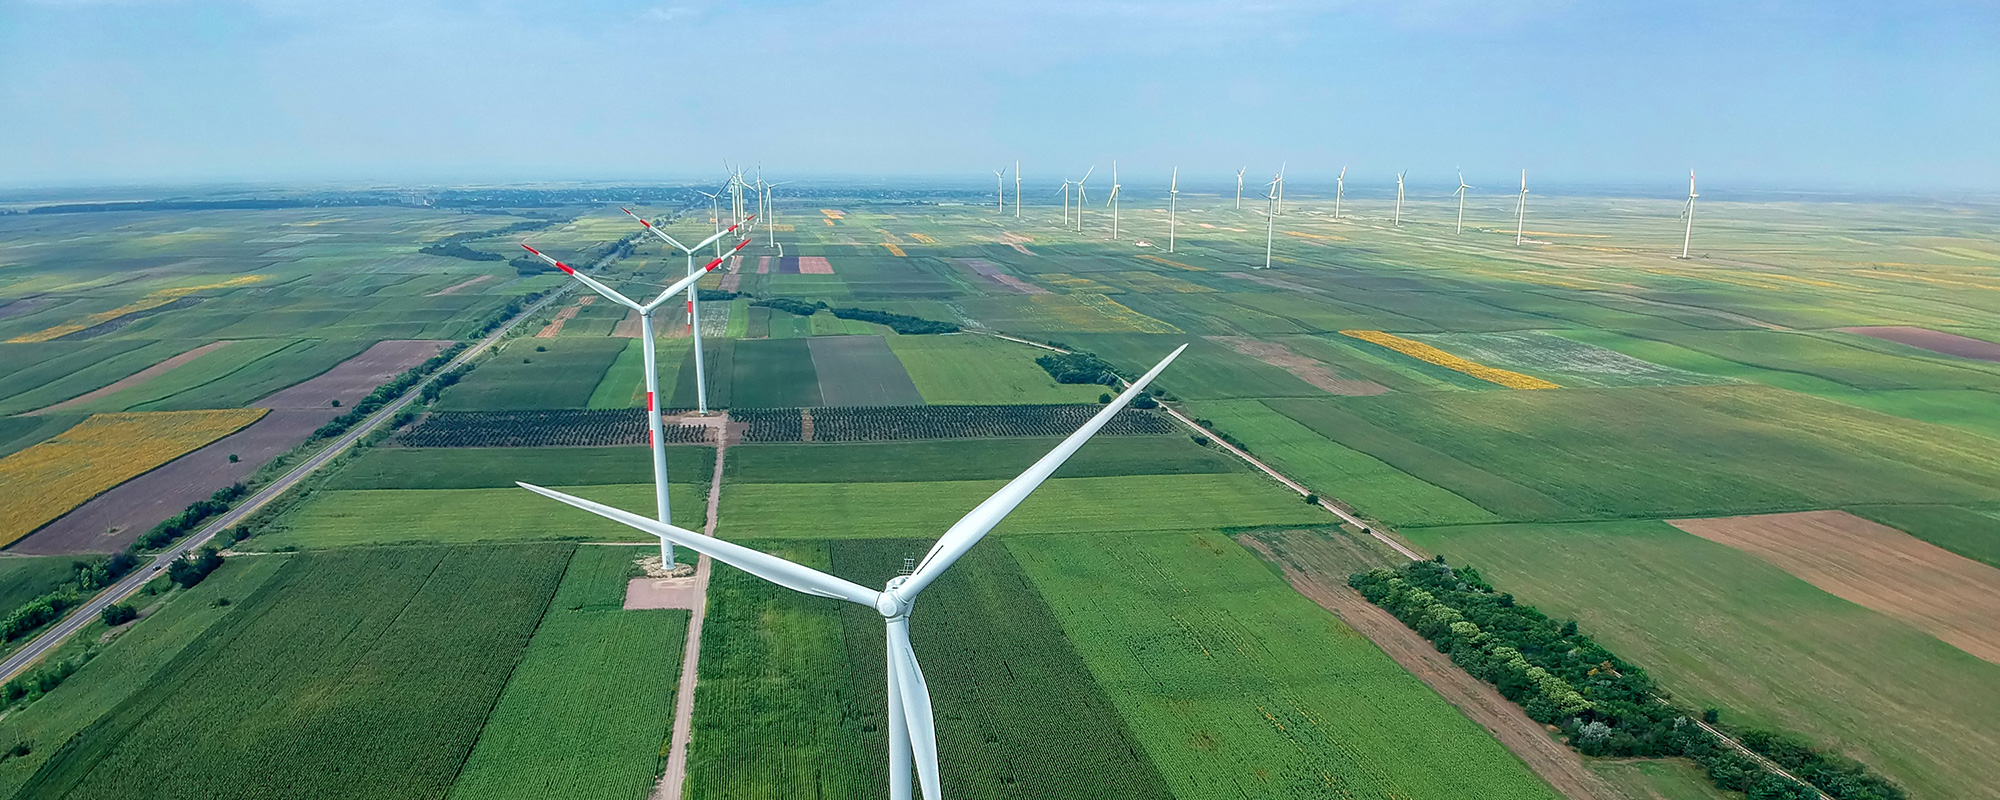 Onshore-Jobs in wind energy